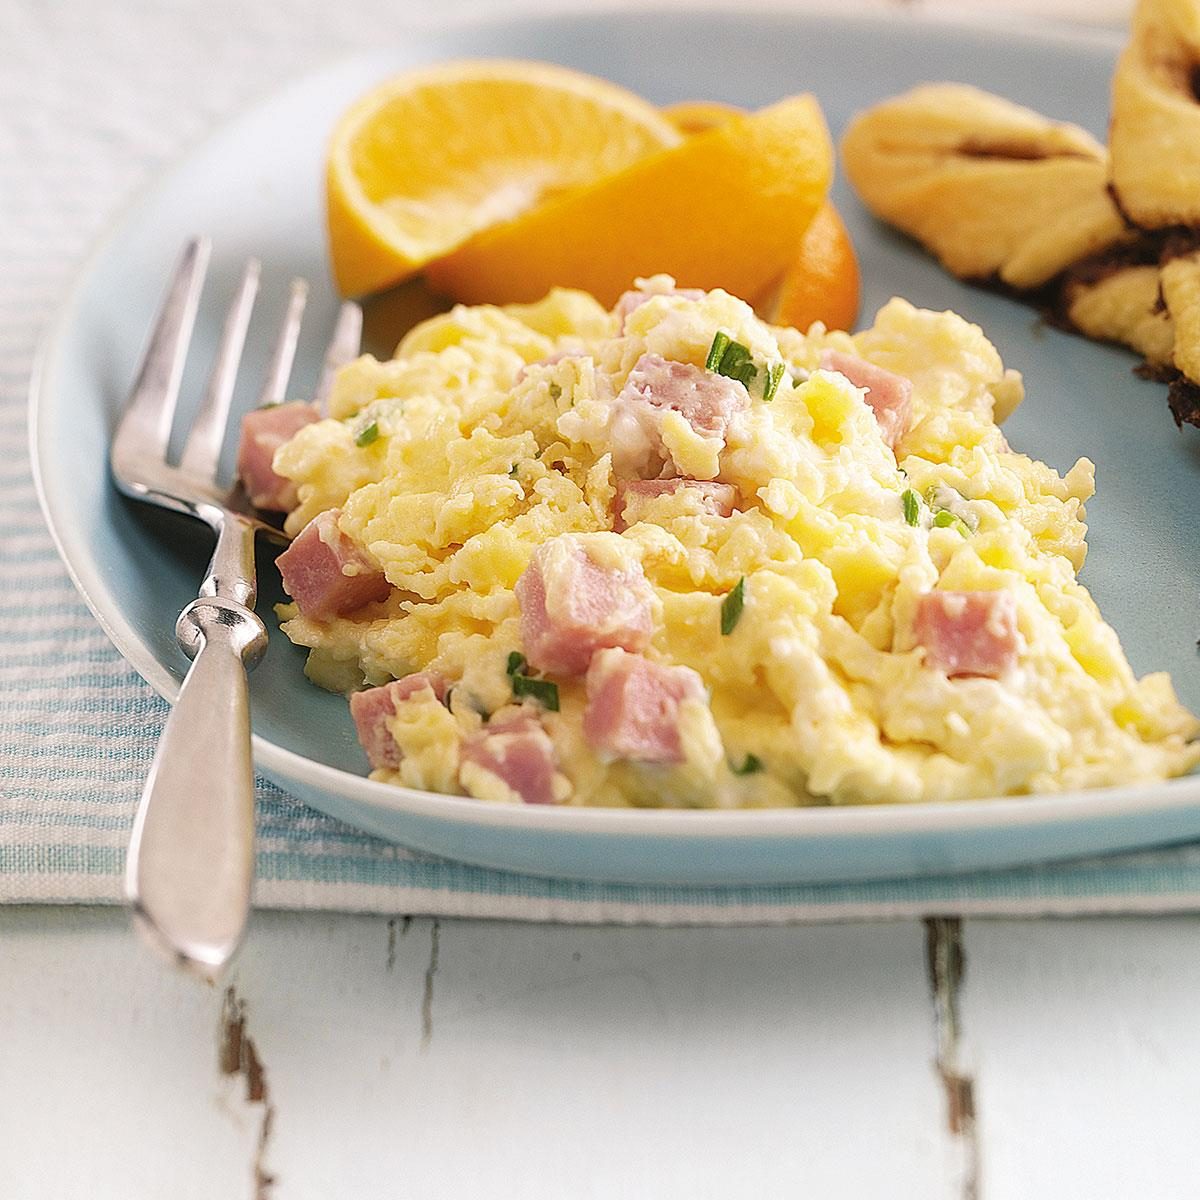 Creamy Scrambled Eggs with Ham Recipe: How to Make It